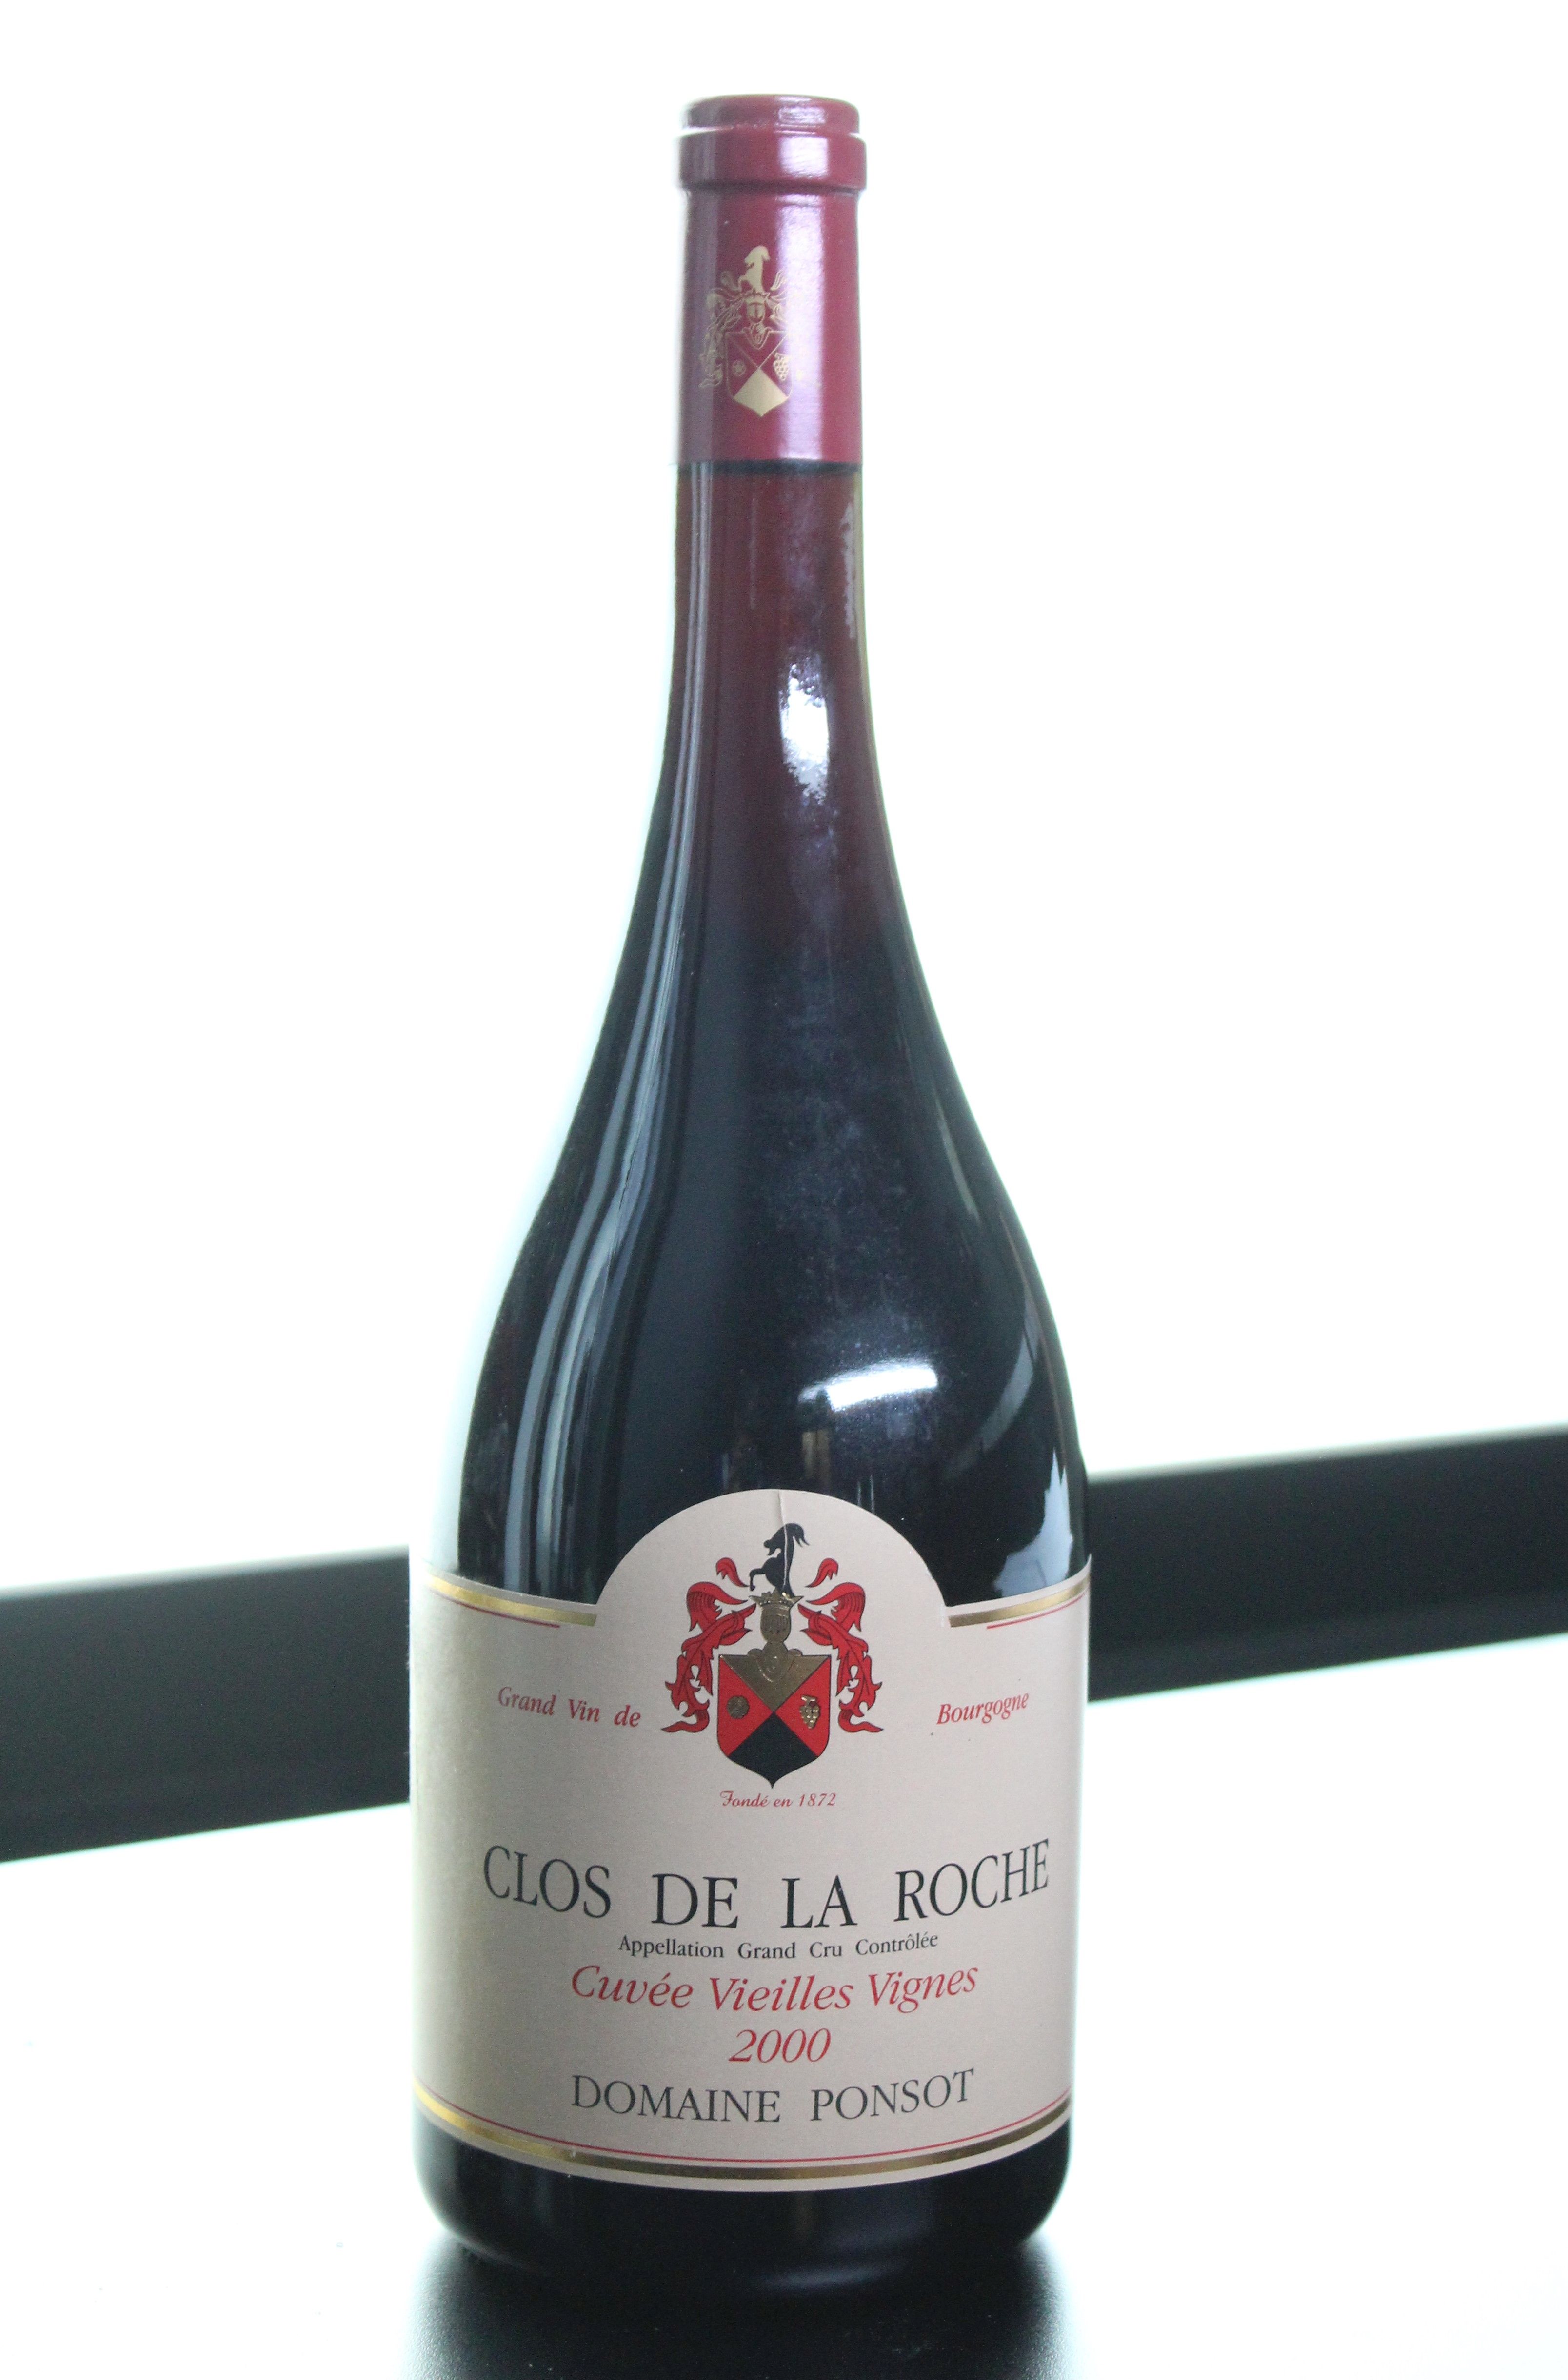 2000 Clos de la Roche Grand Cru, Domaine Ponsot